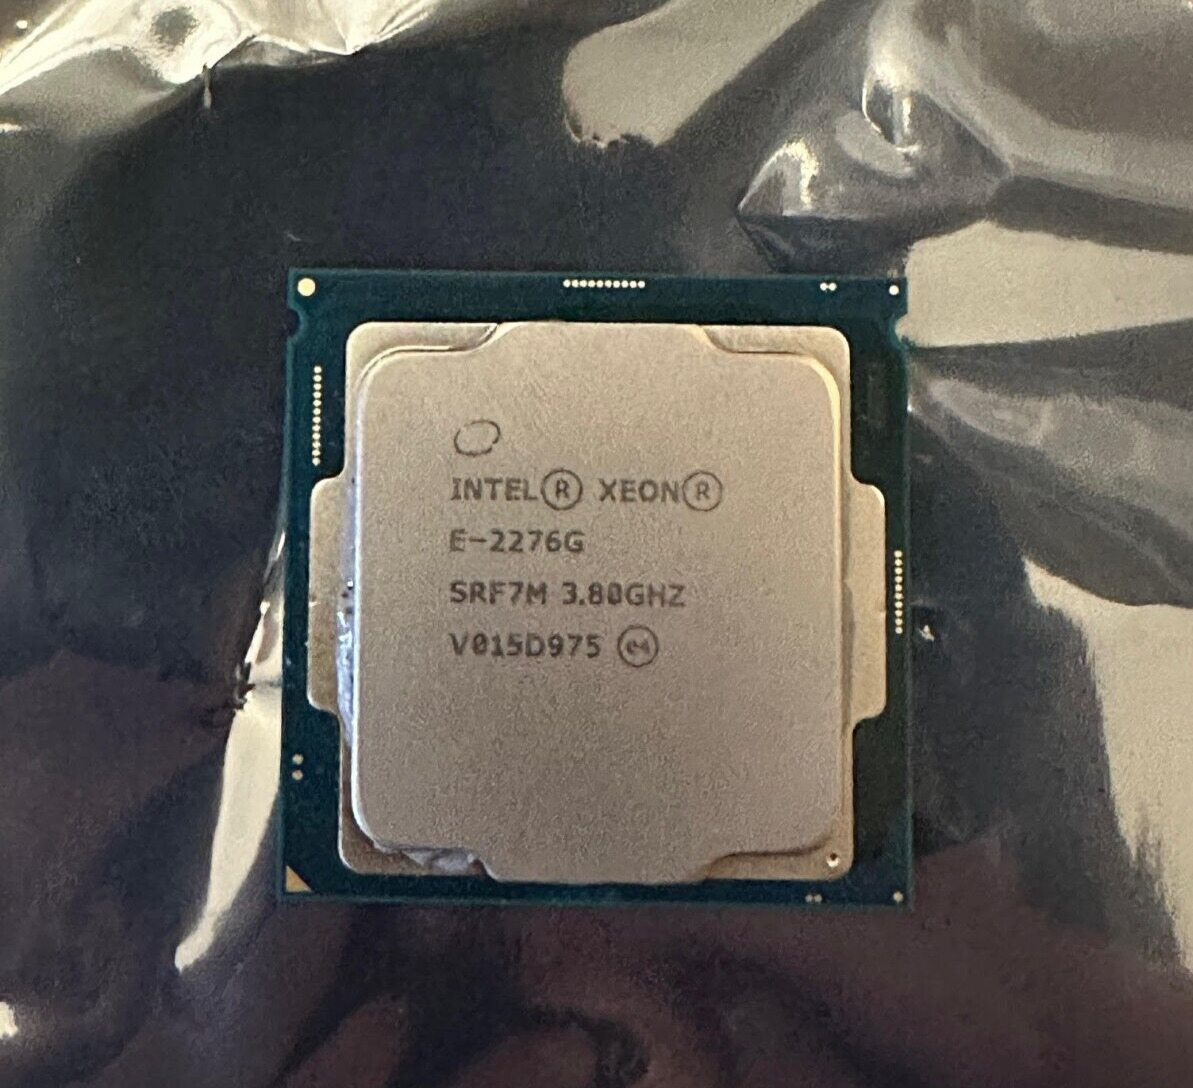 Intel Xeon E-2276G 3.8GHz Processor | SRF7M | GENUINE | FAST SHIP